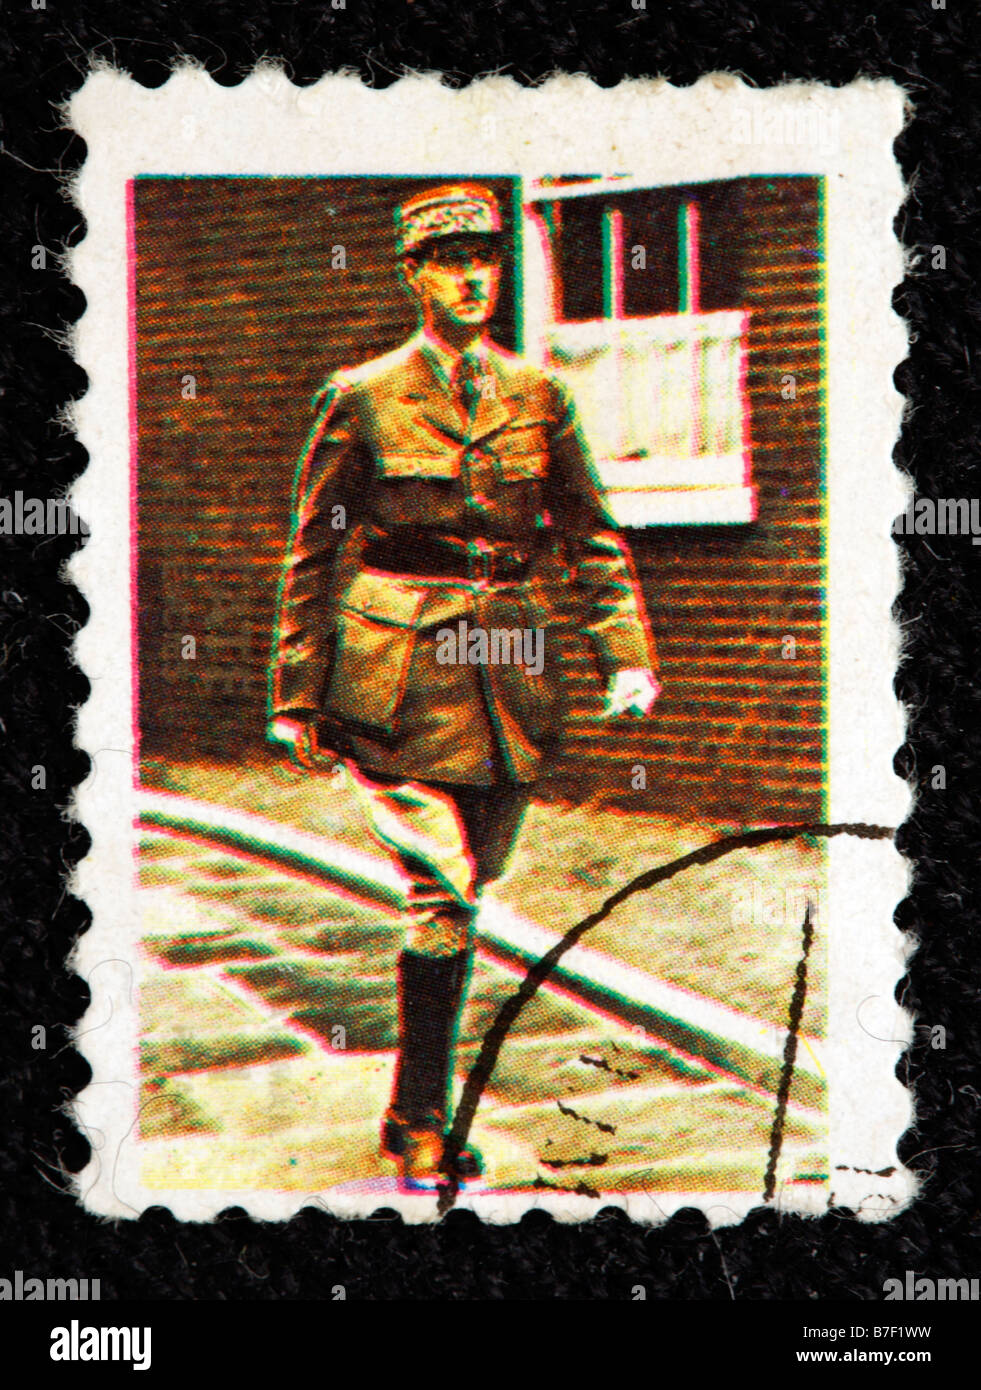 Charles de Gaulle (1890-1970), General, President of France, postage stamp, Ajman, UAE Stock Photo